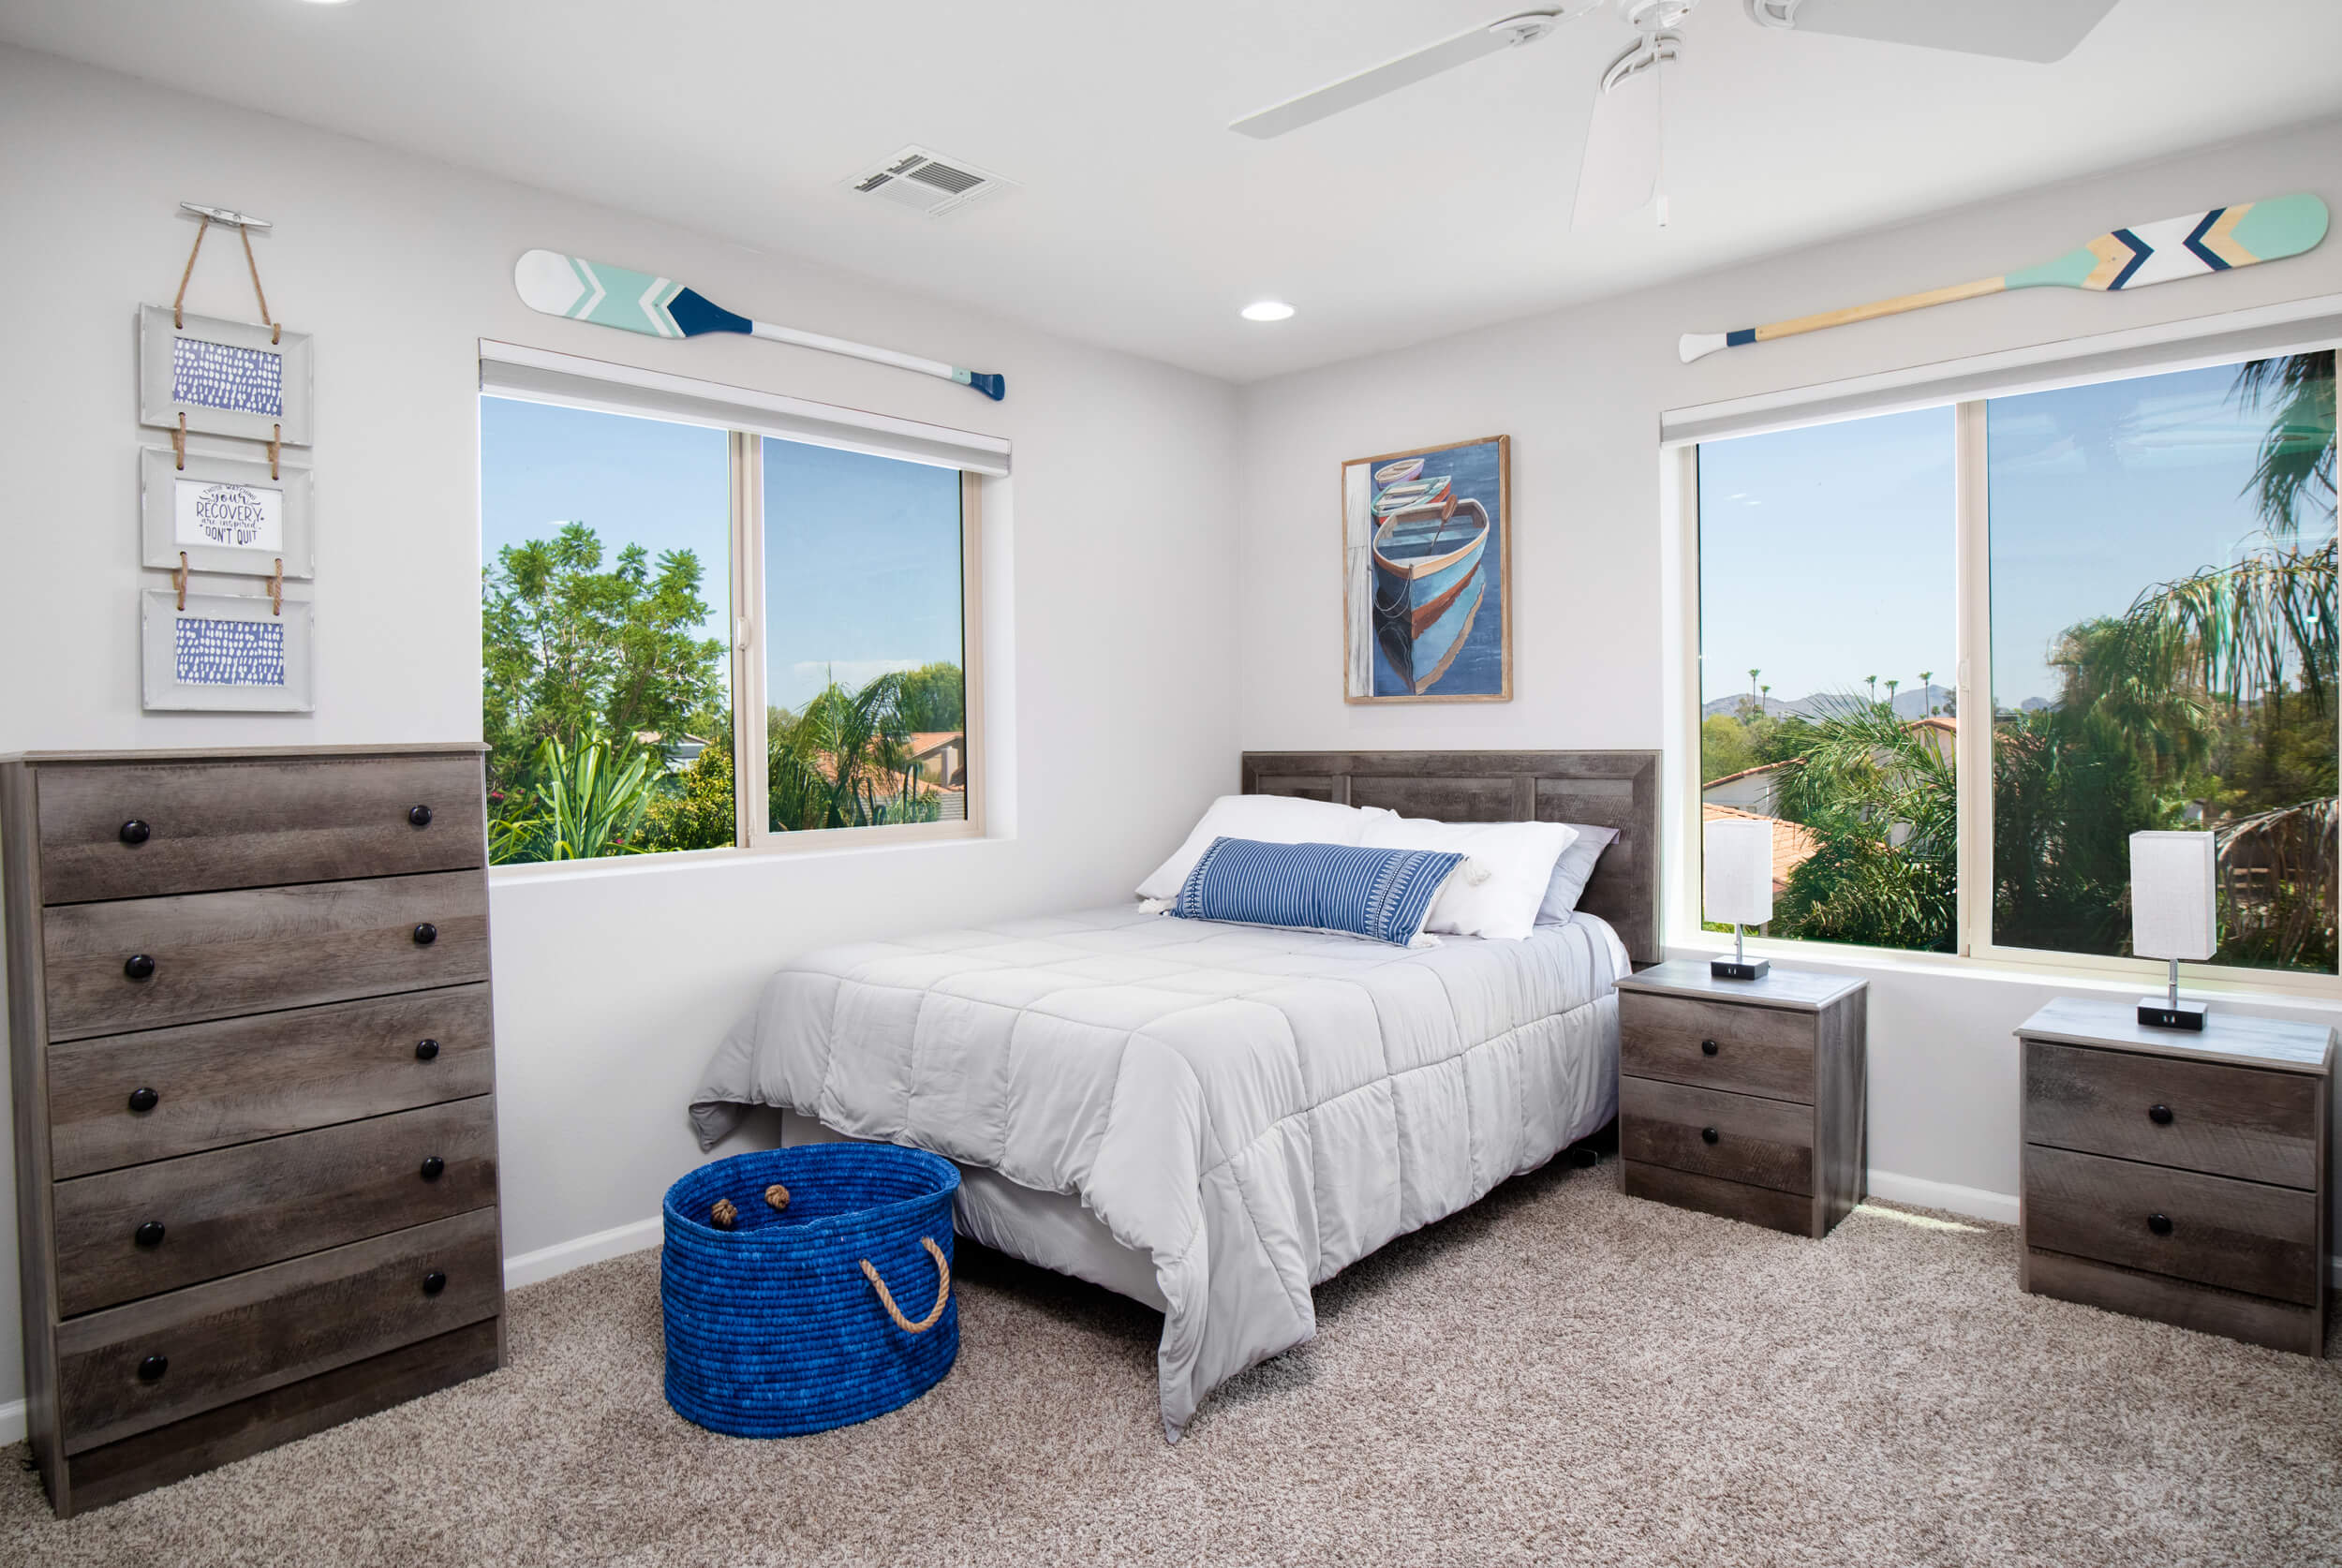 Bedroom at mens recovery living, Phoenix AZ.